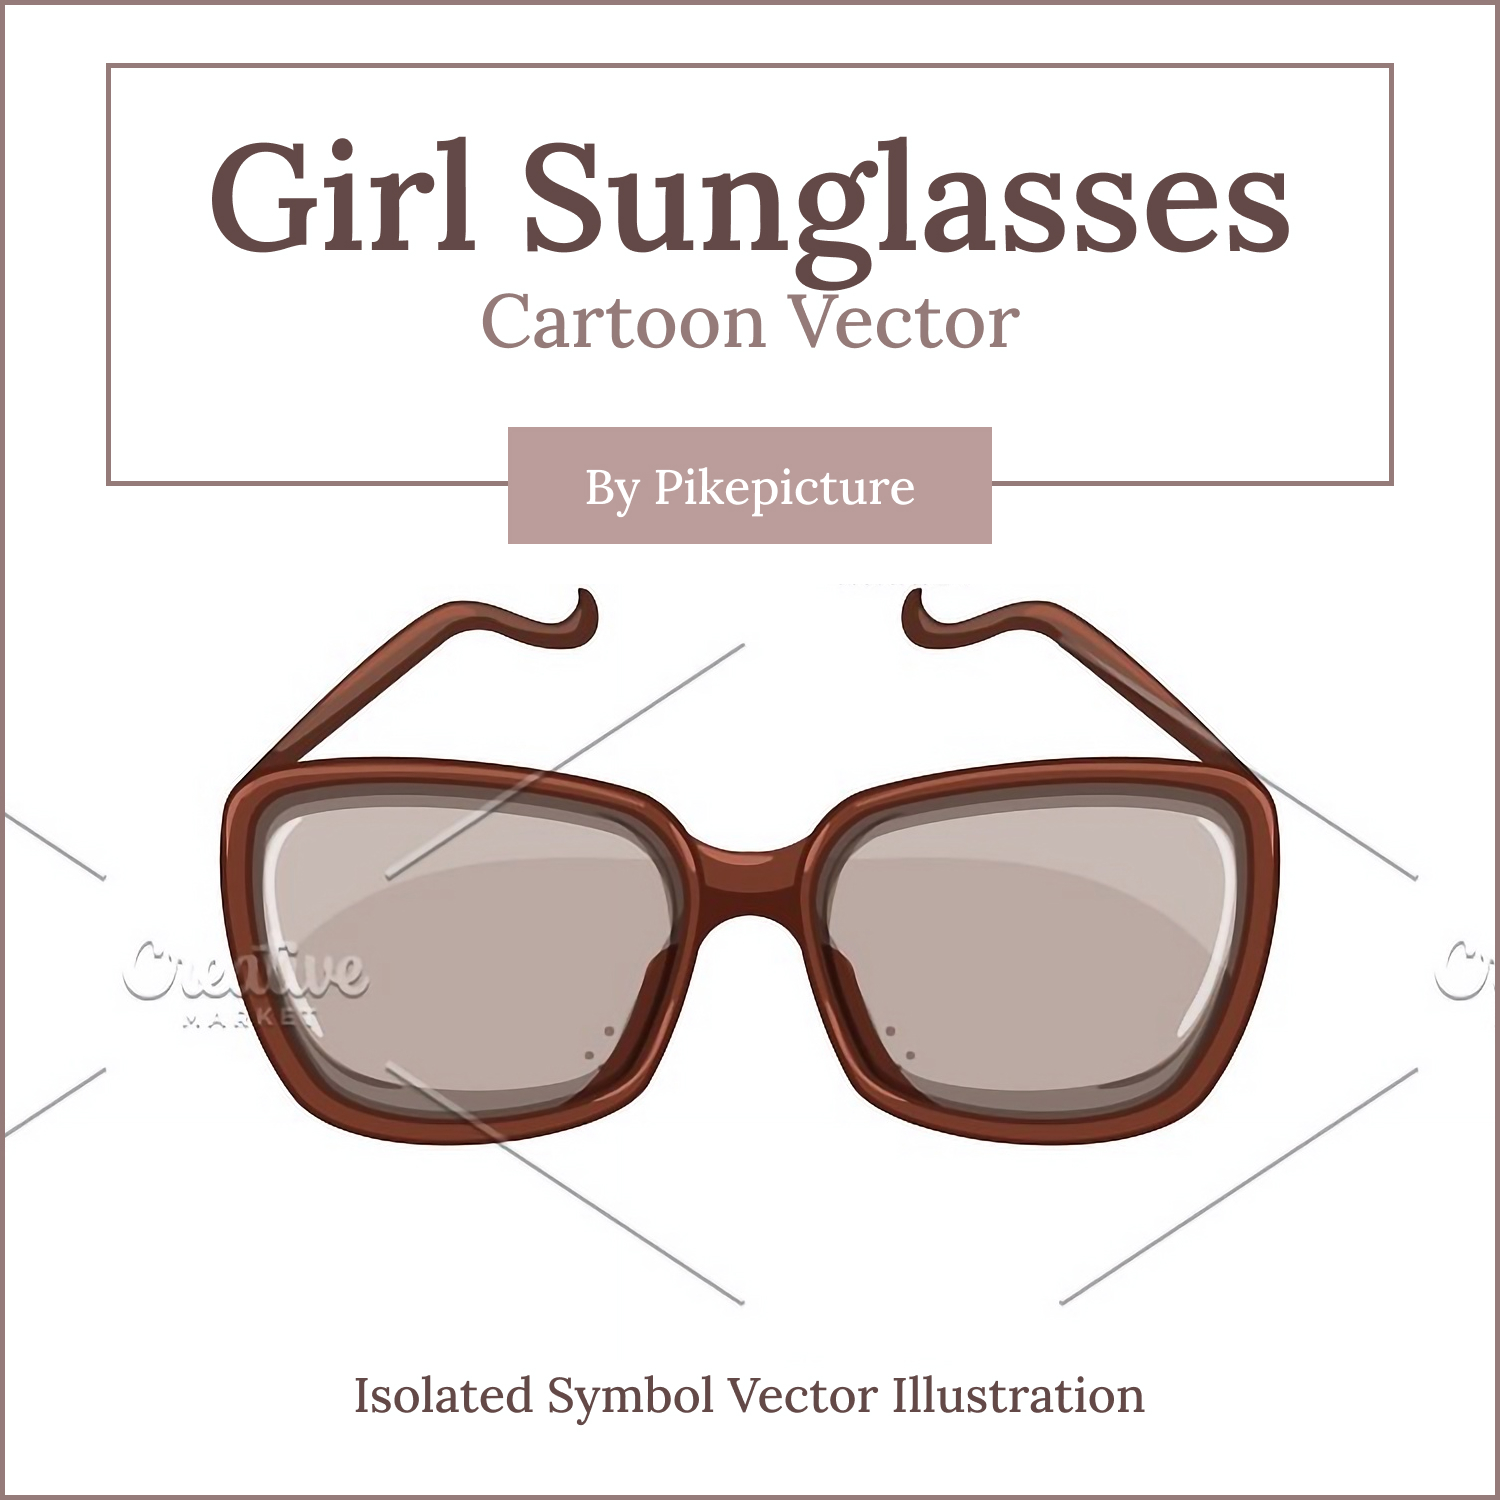 Girl Sunglasses Women Cartoon Vector Main Cover.